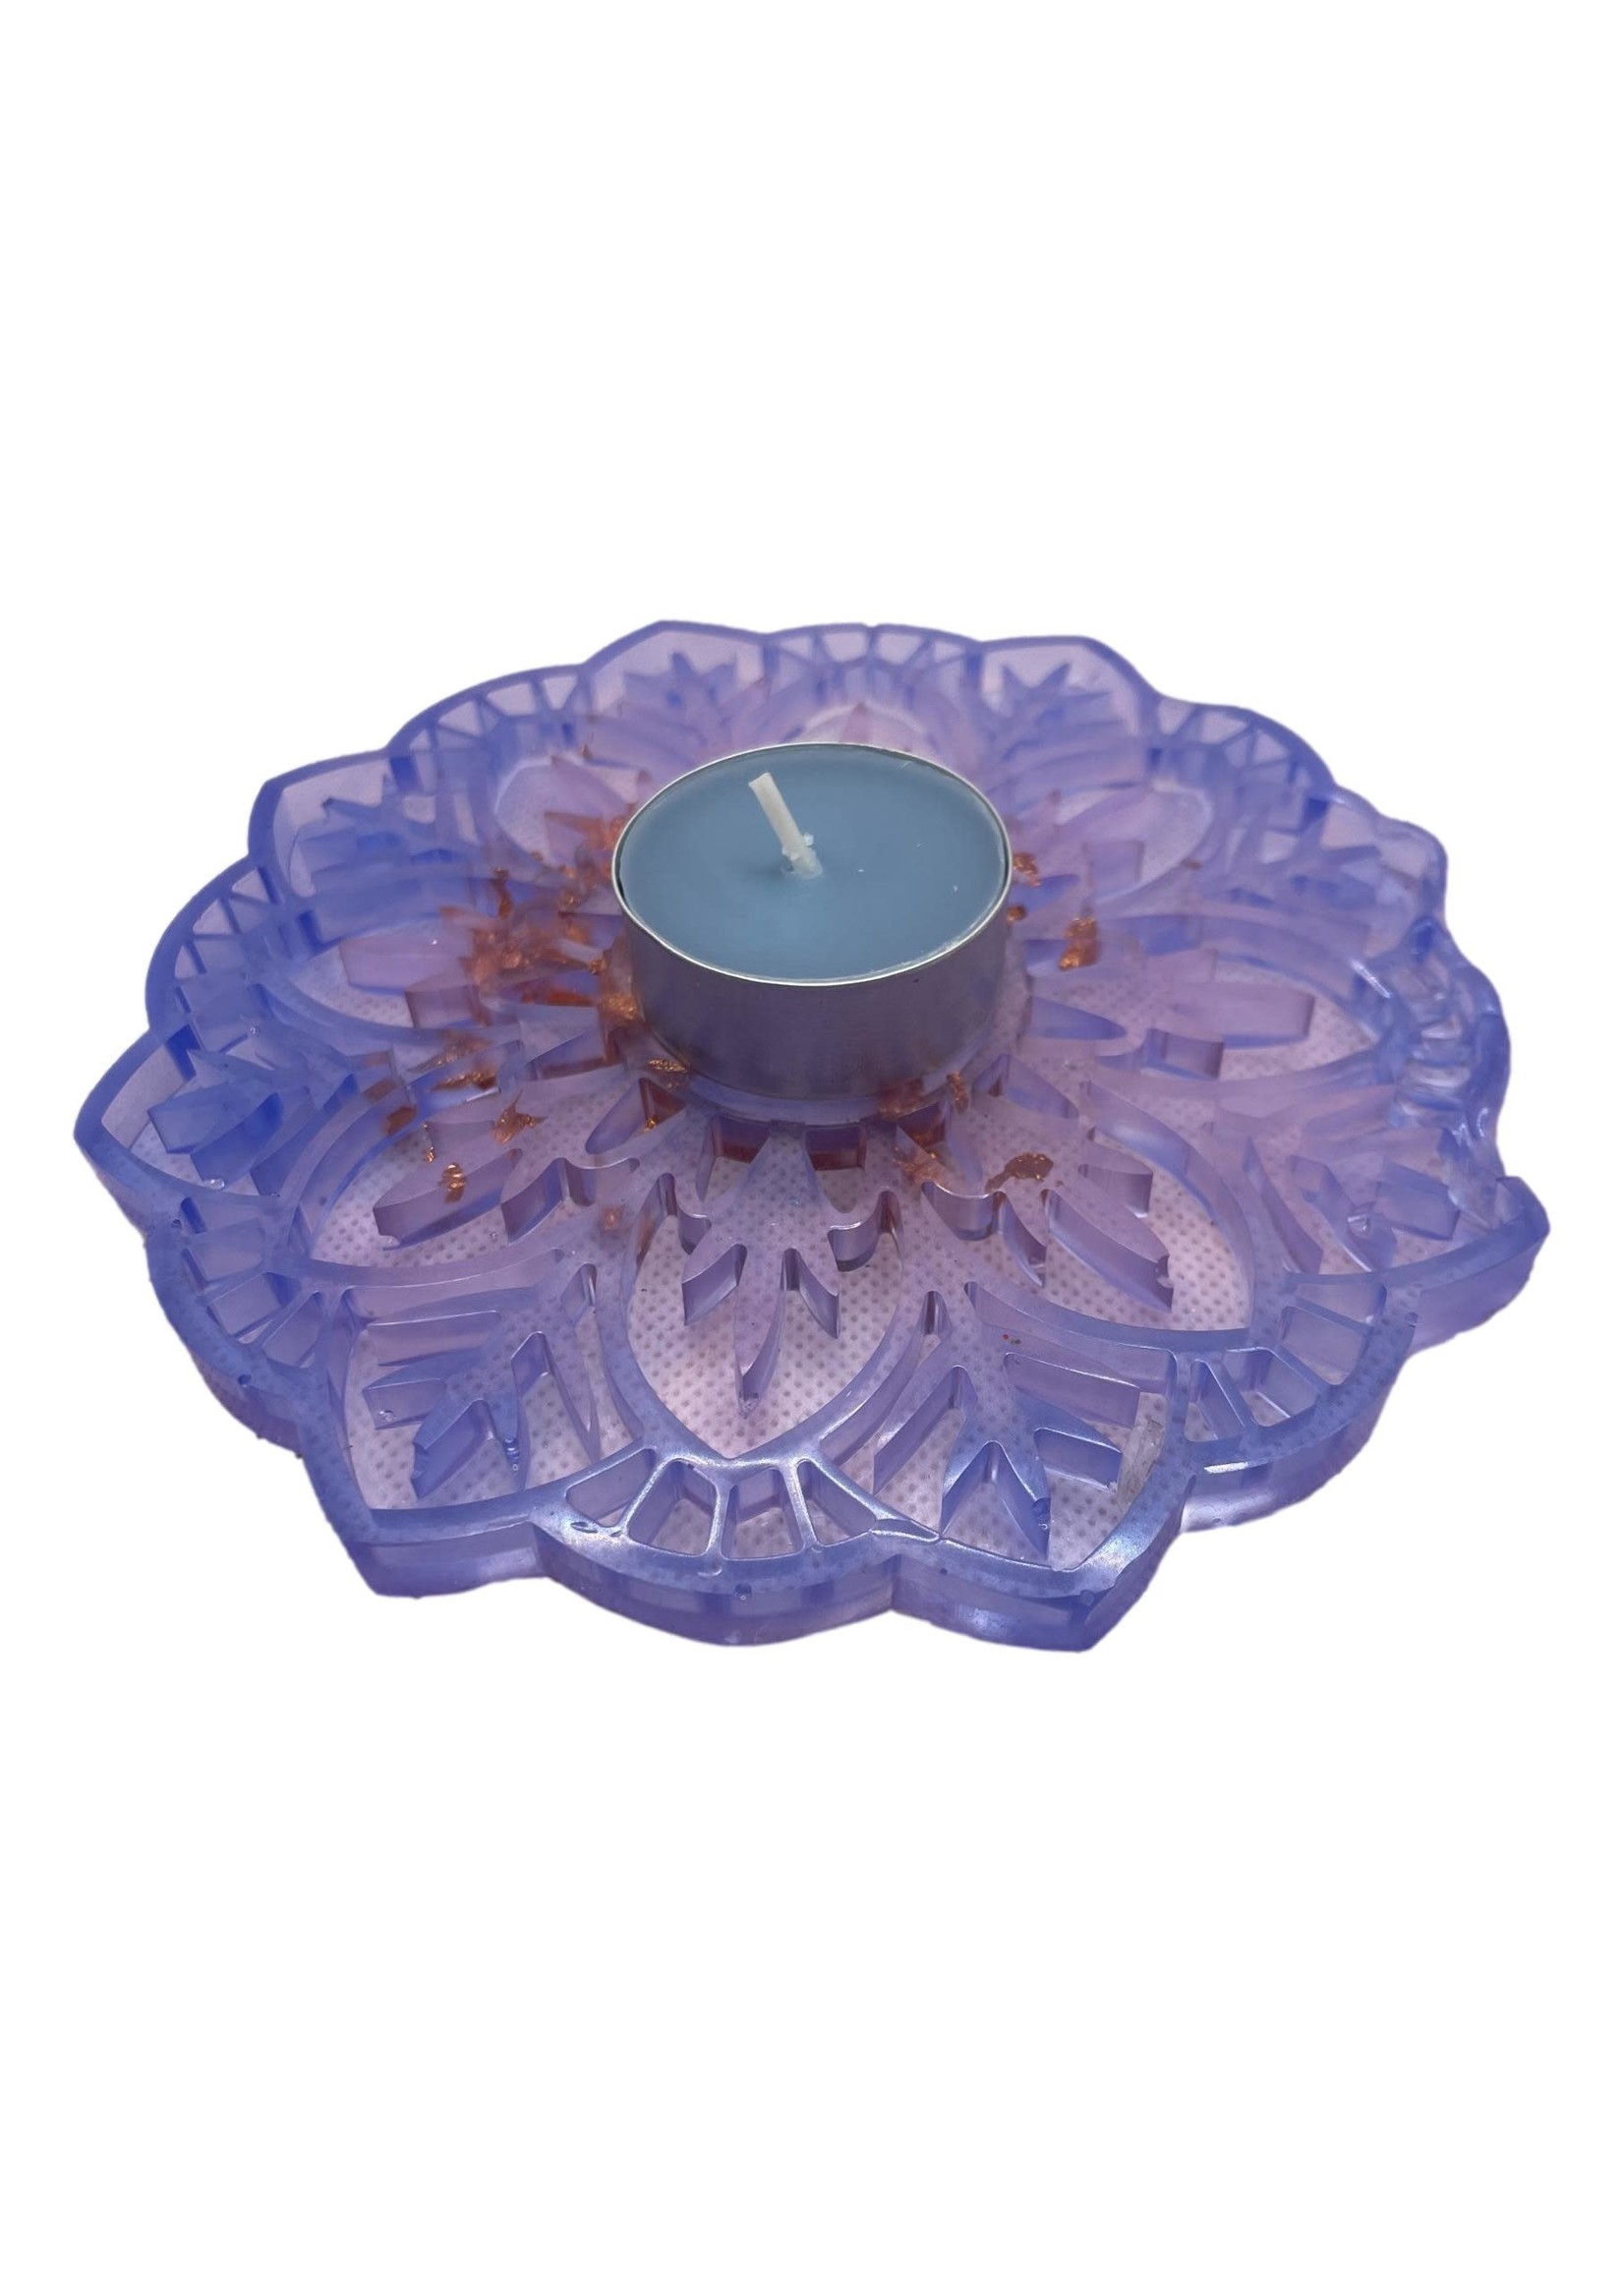 East Coast Sirens Blue Lotus Flower Candle Holder